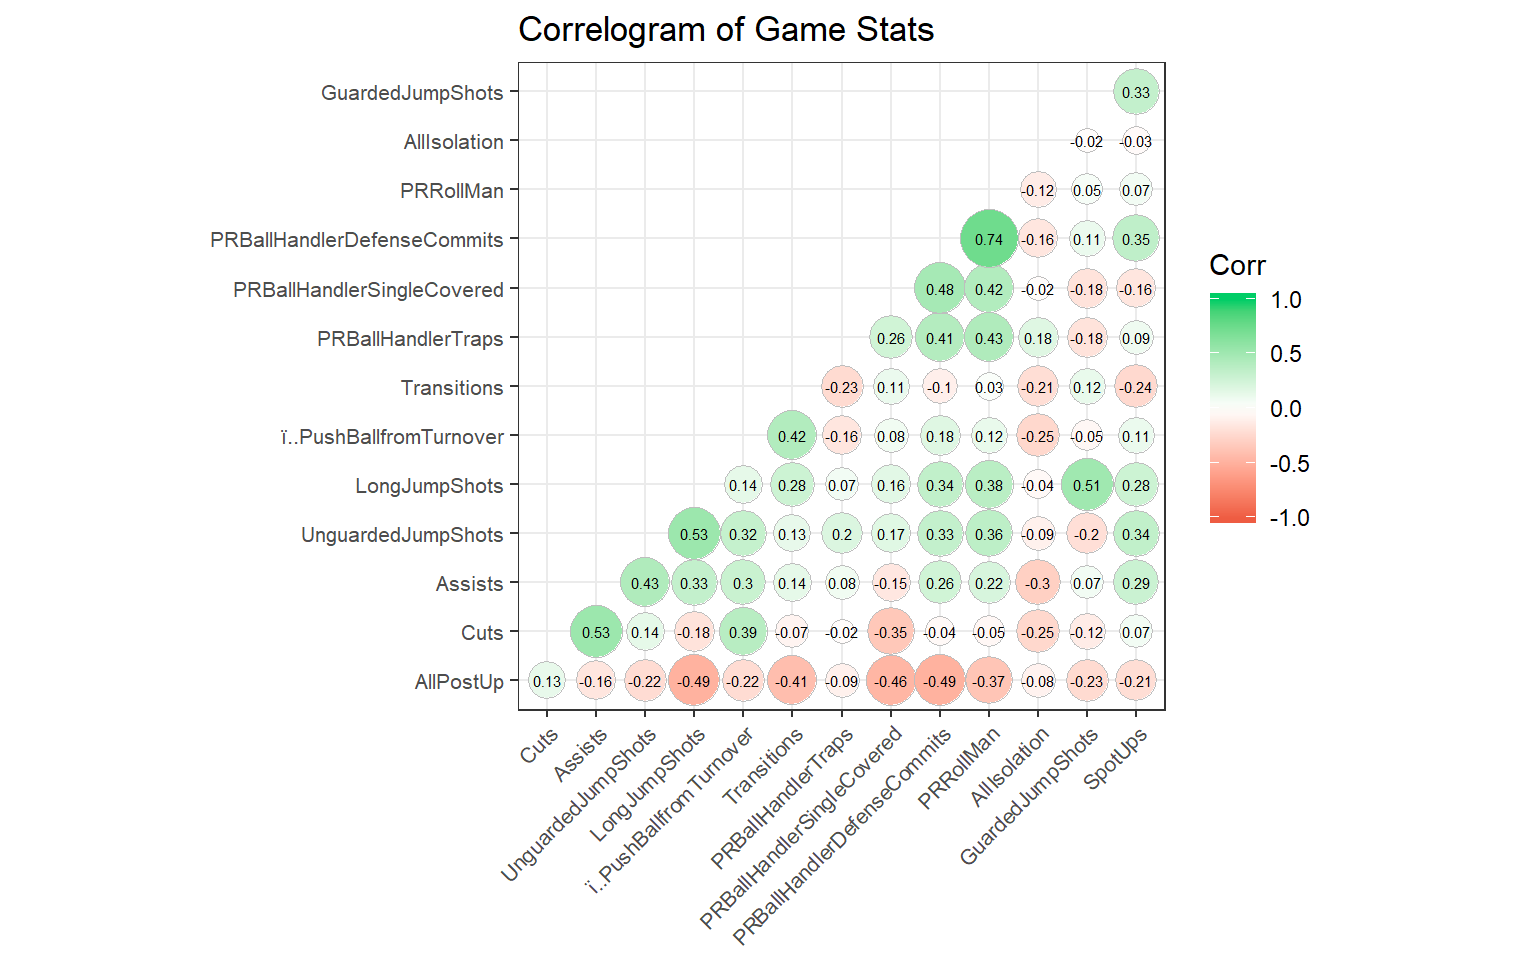 Correlogram of Game Statistics